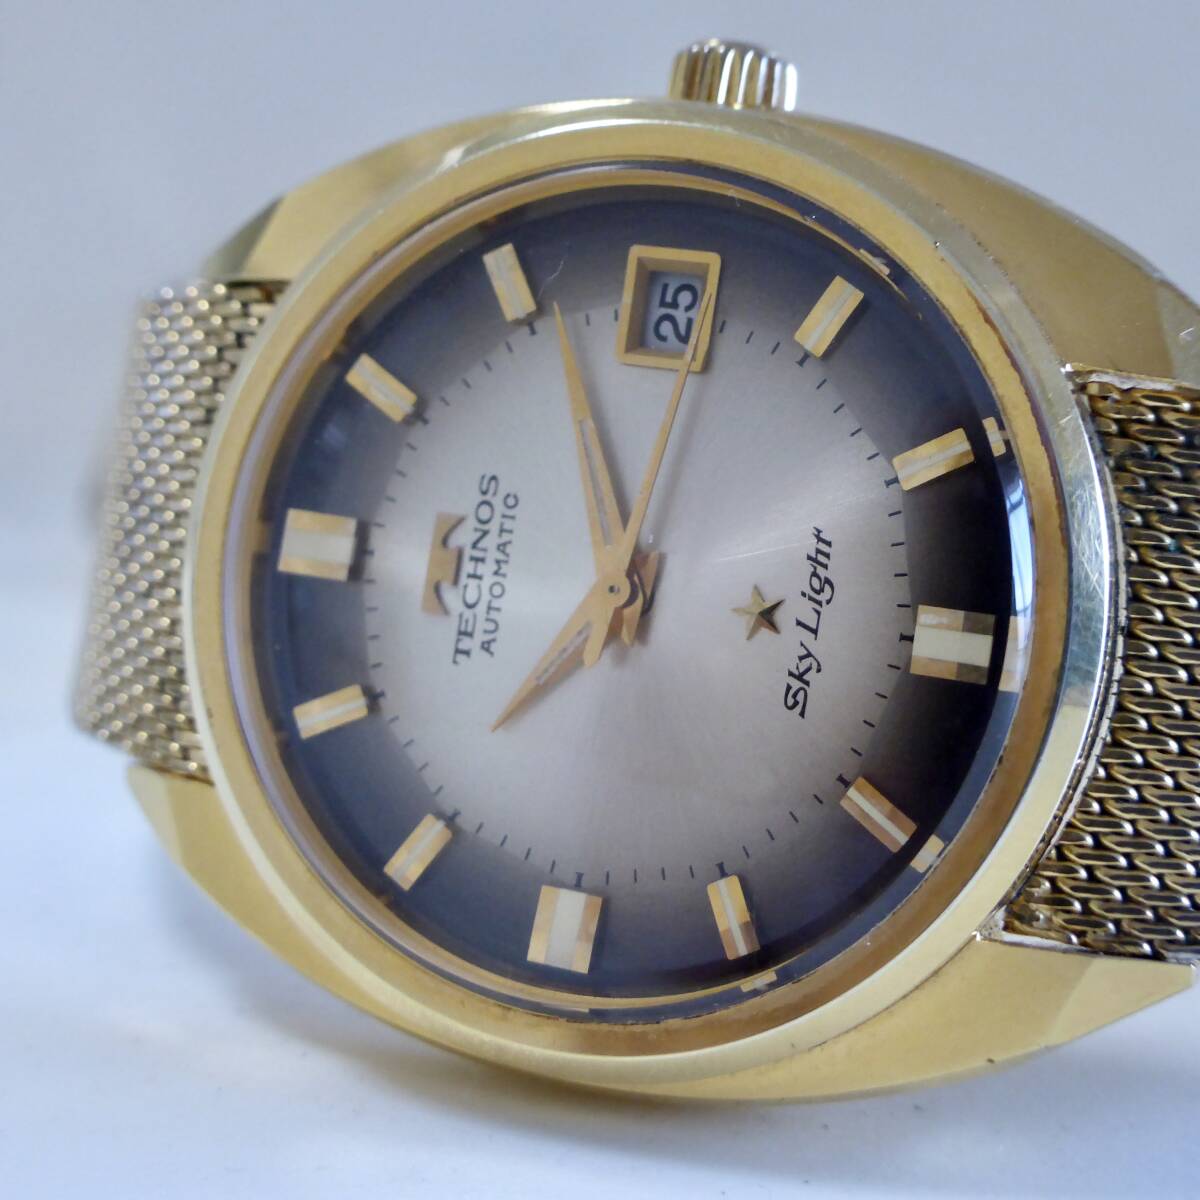 !TECHNOS Tecnos skylight Sky Light self-winding watch men's wristwatch Gold original breath attaching glass beautiful beautiful goods 